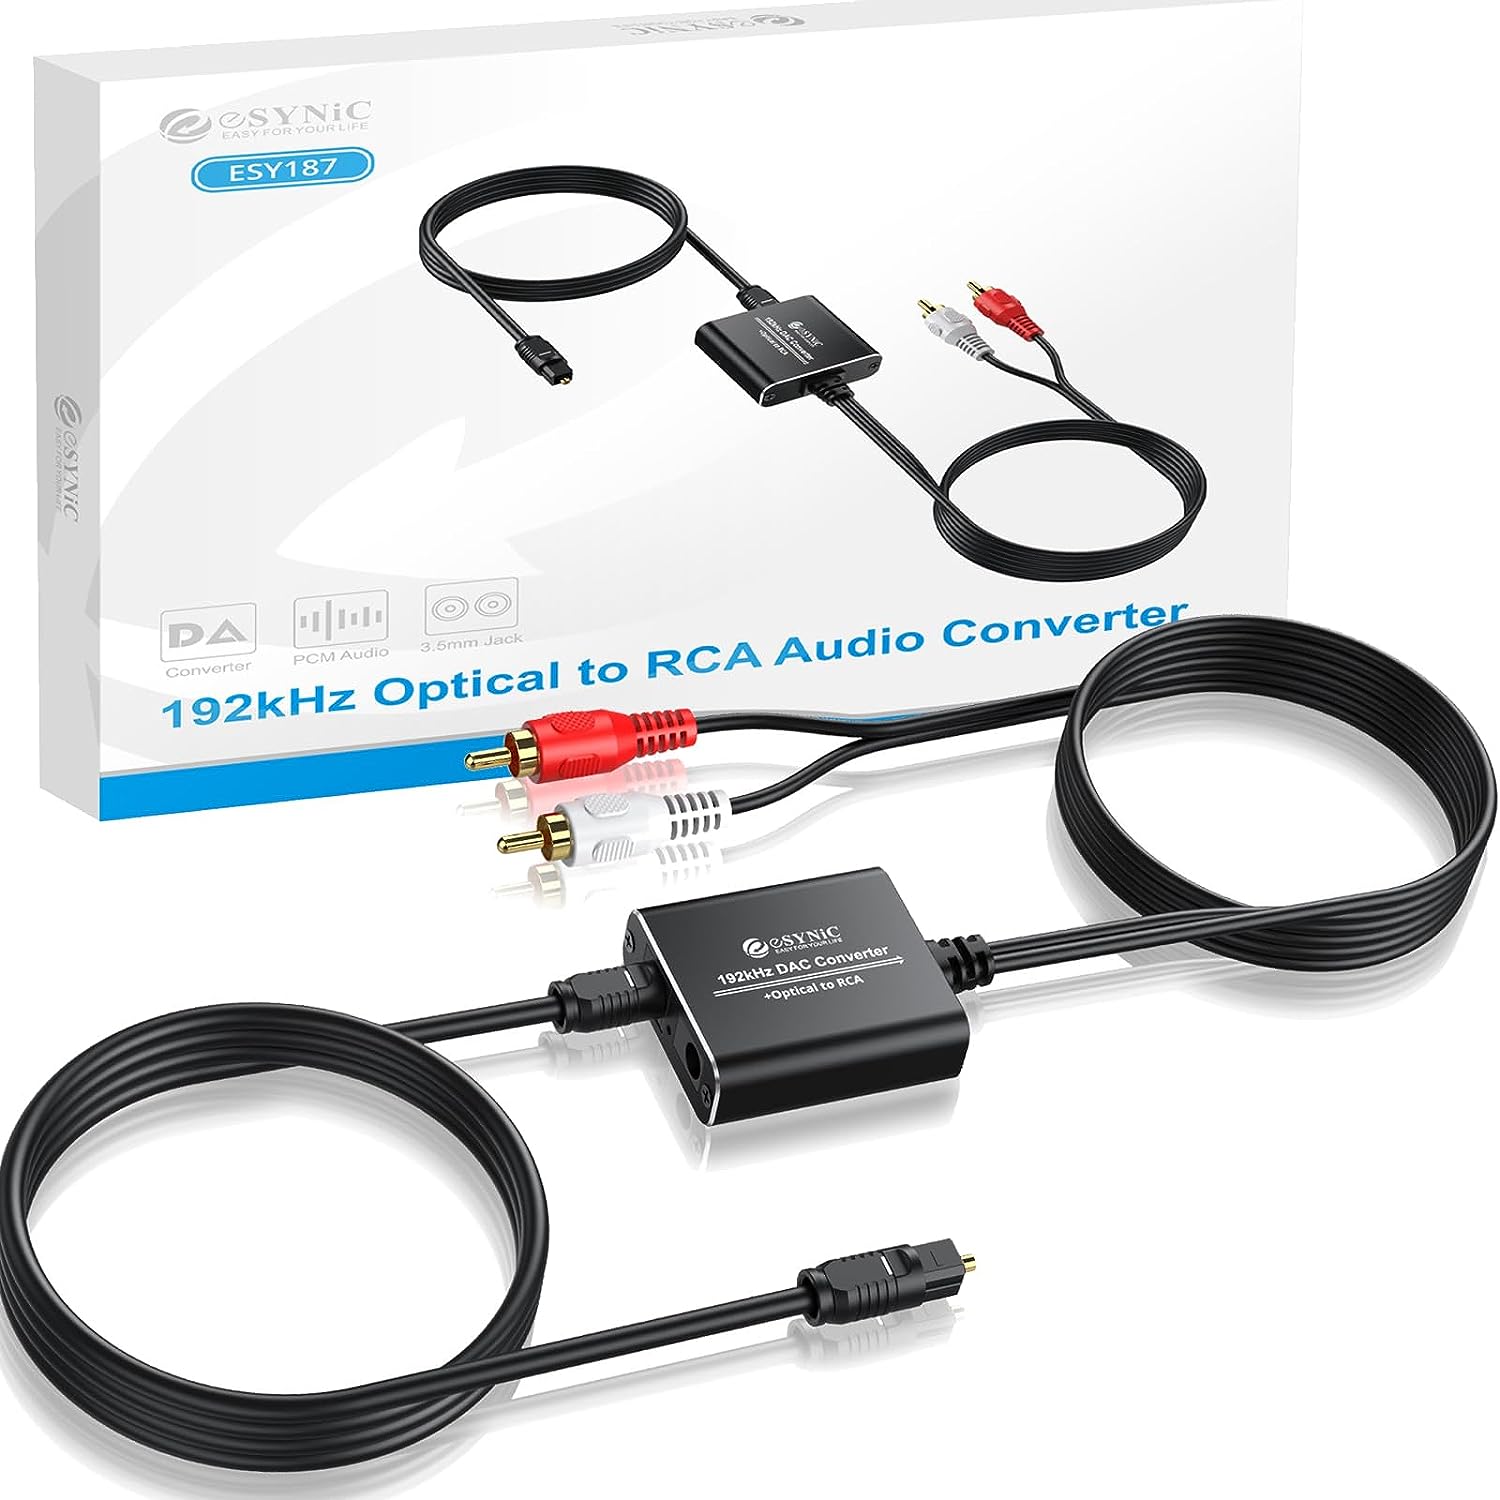 eSynic Premium 192 KHZ Digital to Analog Audio Converter Portable Optical to RCA Adapter